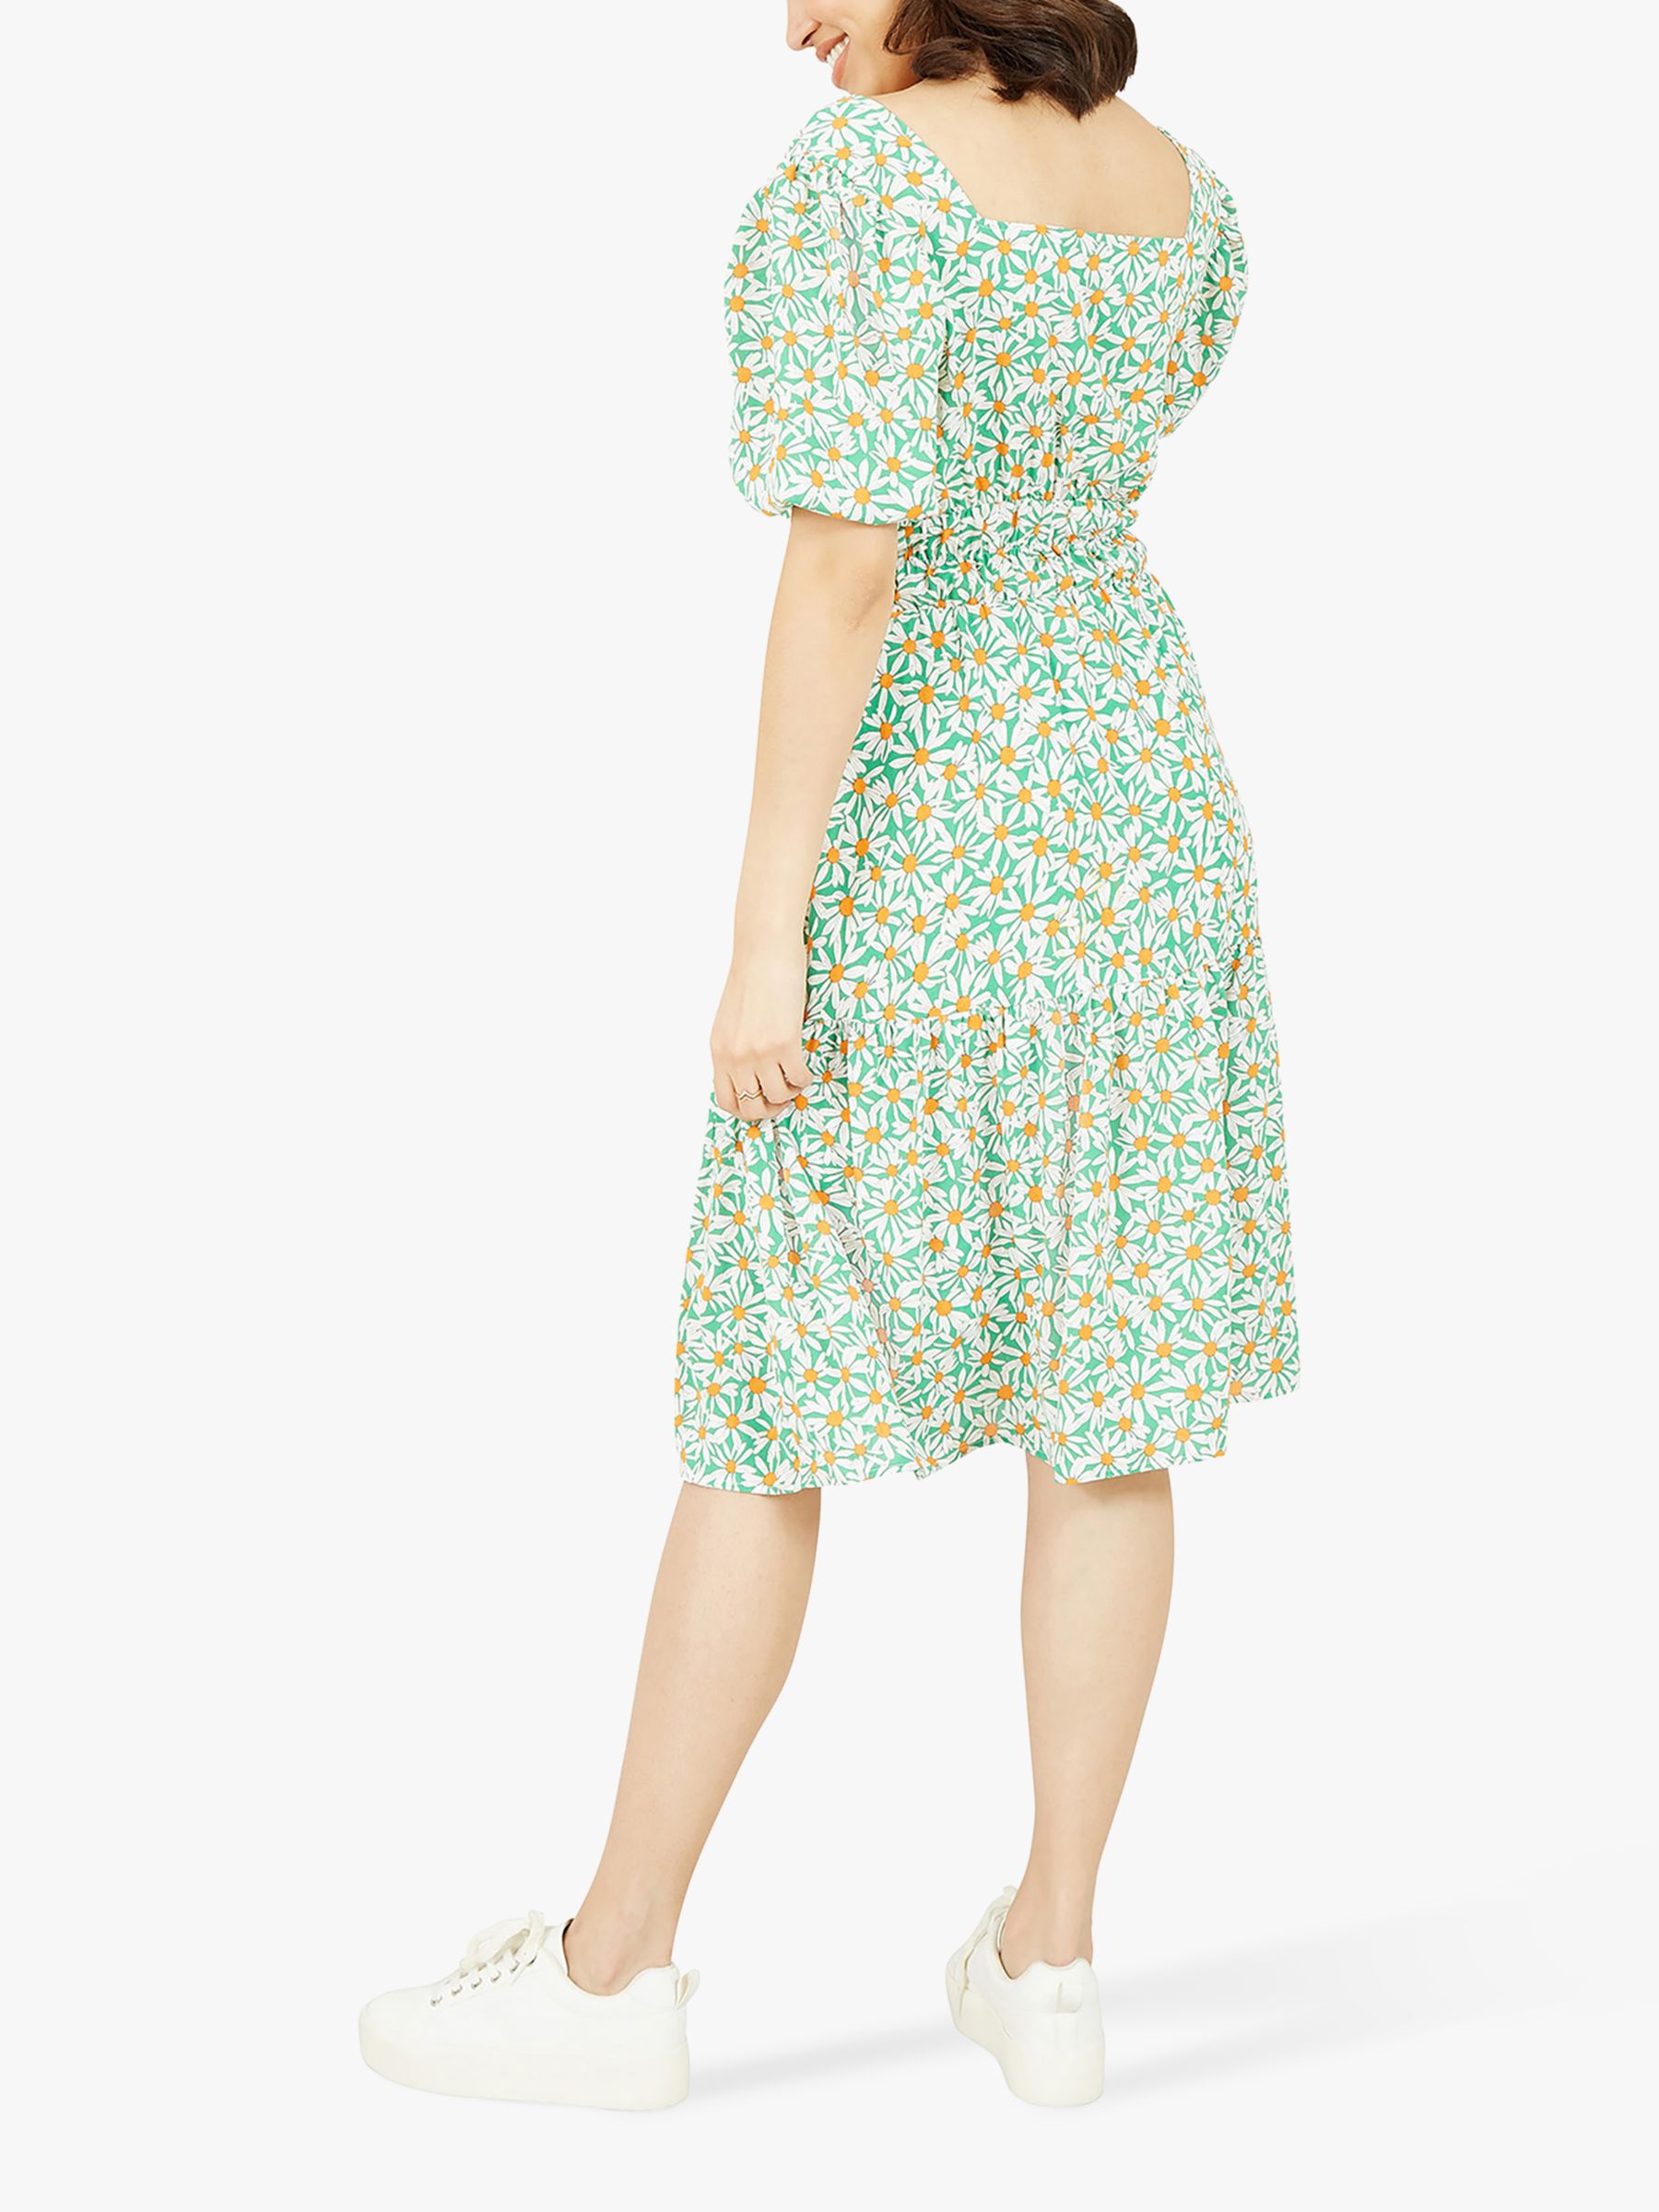 Mela London Daisy Ruched Puff Sleeve Midi Dress, Green/Multi, 8